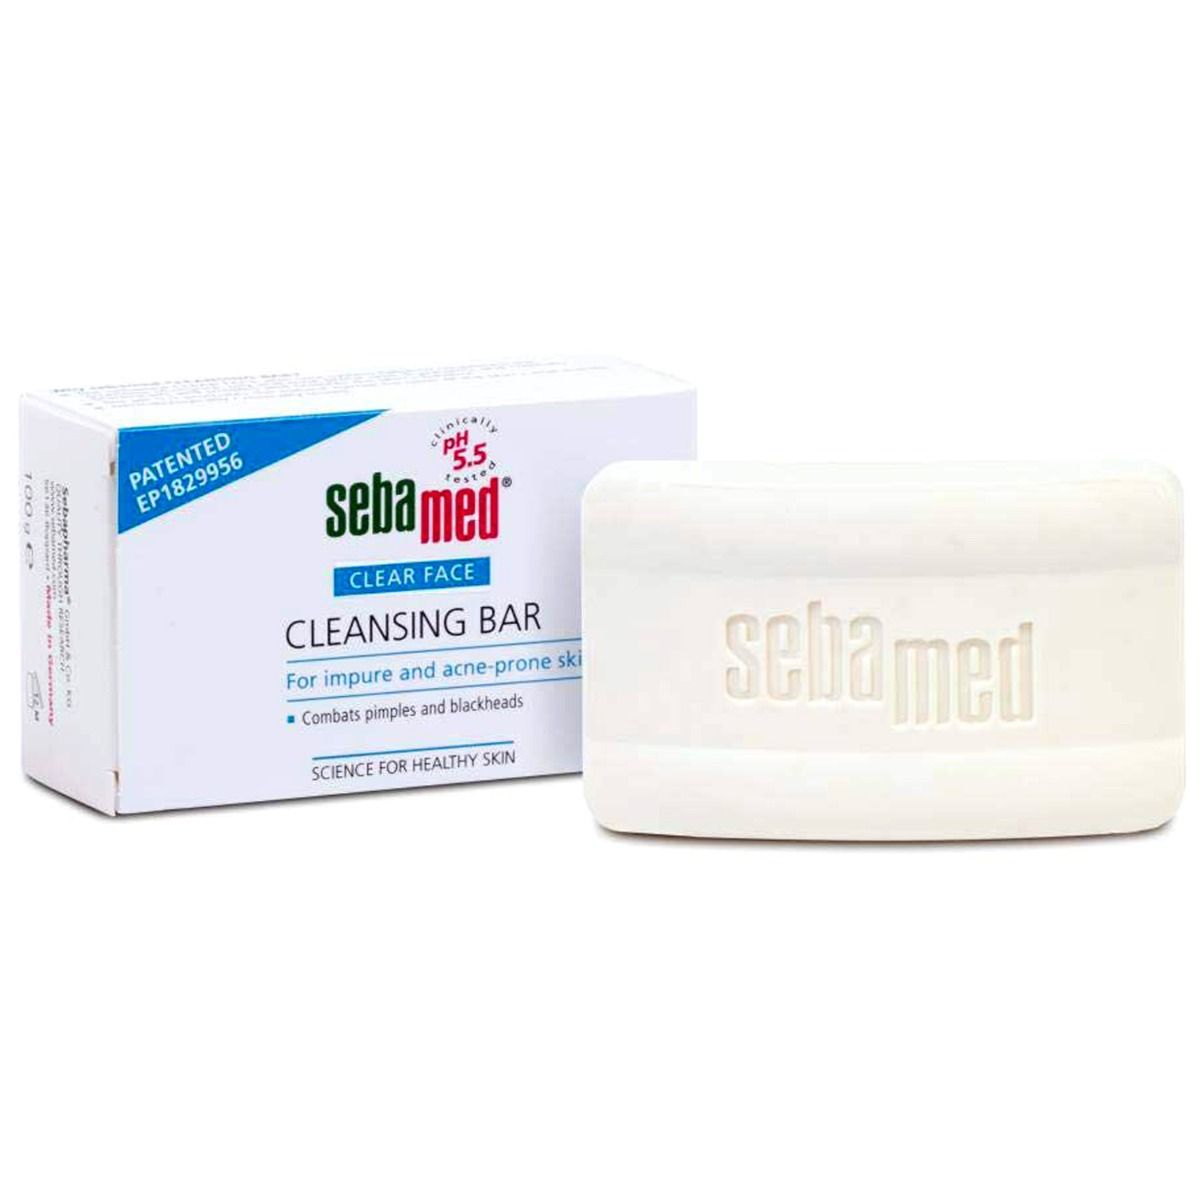 Sebamed Clear Face Cleansing Bar, 100 gm, Pack of 1 